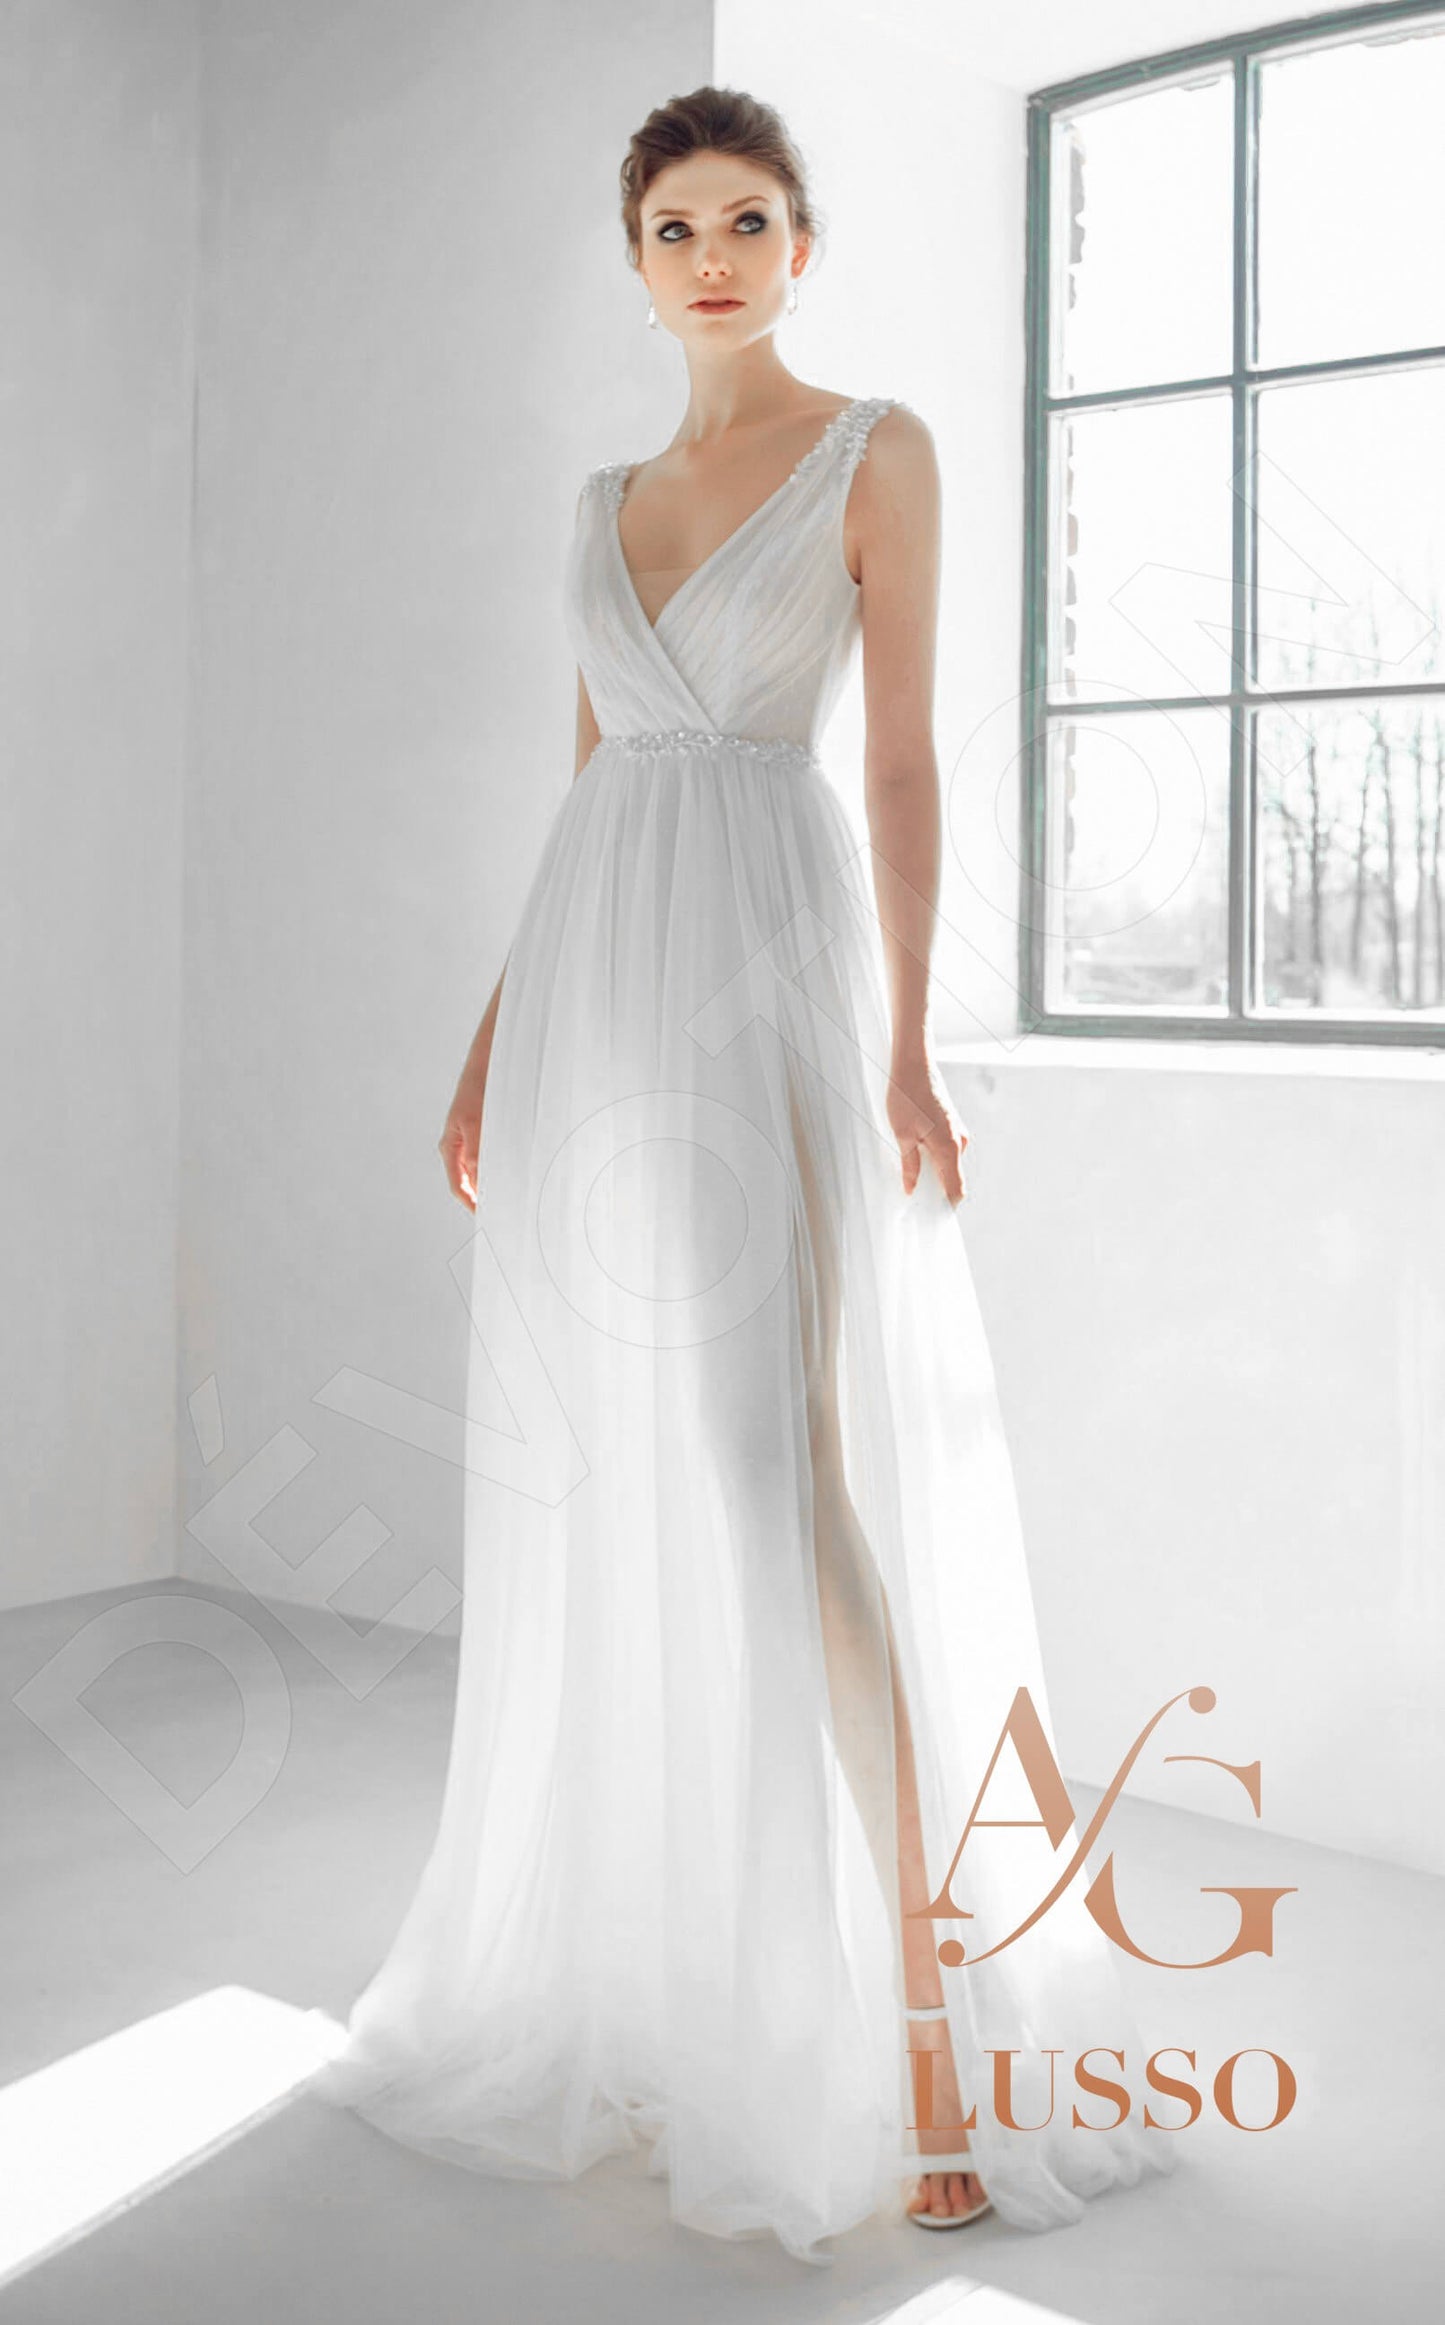 Chloelini Open back Sheath/Column Sleeveless Wedding Dress Front